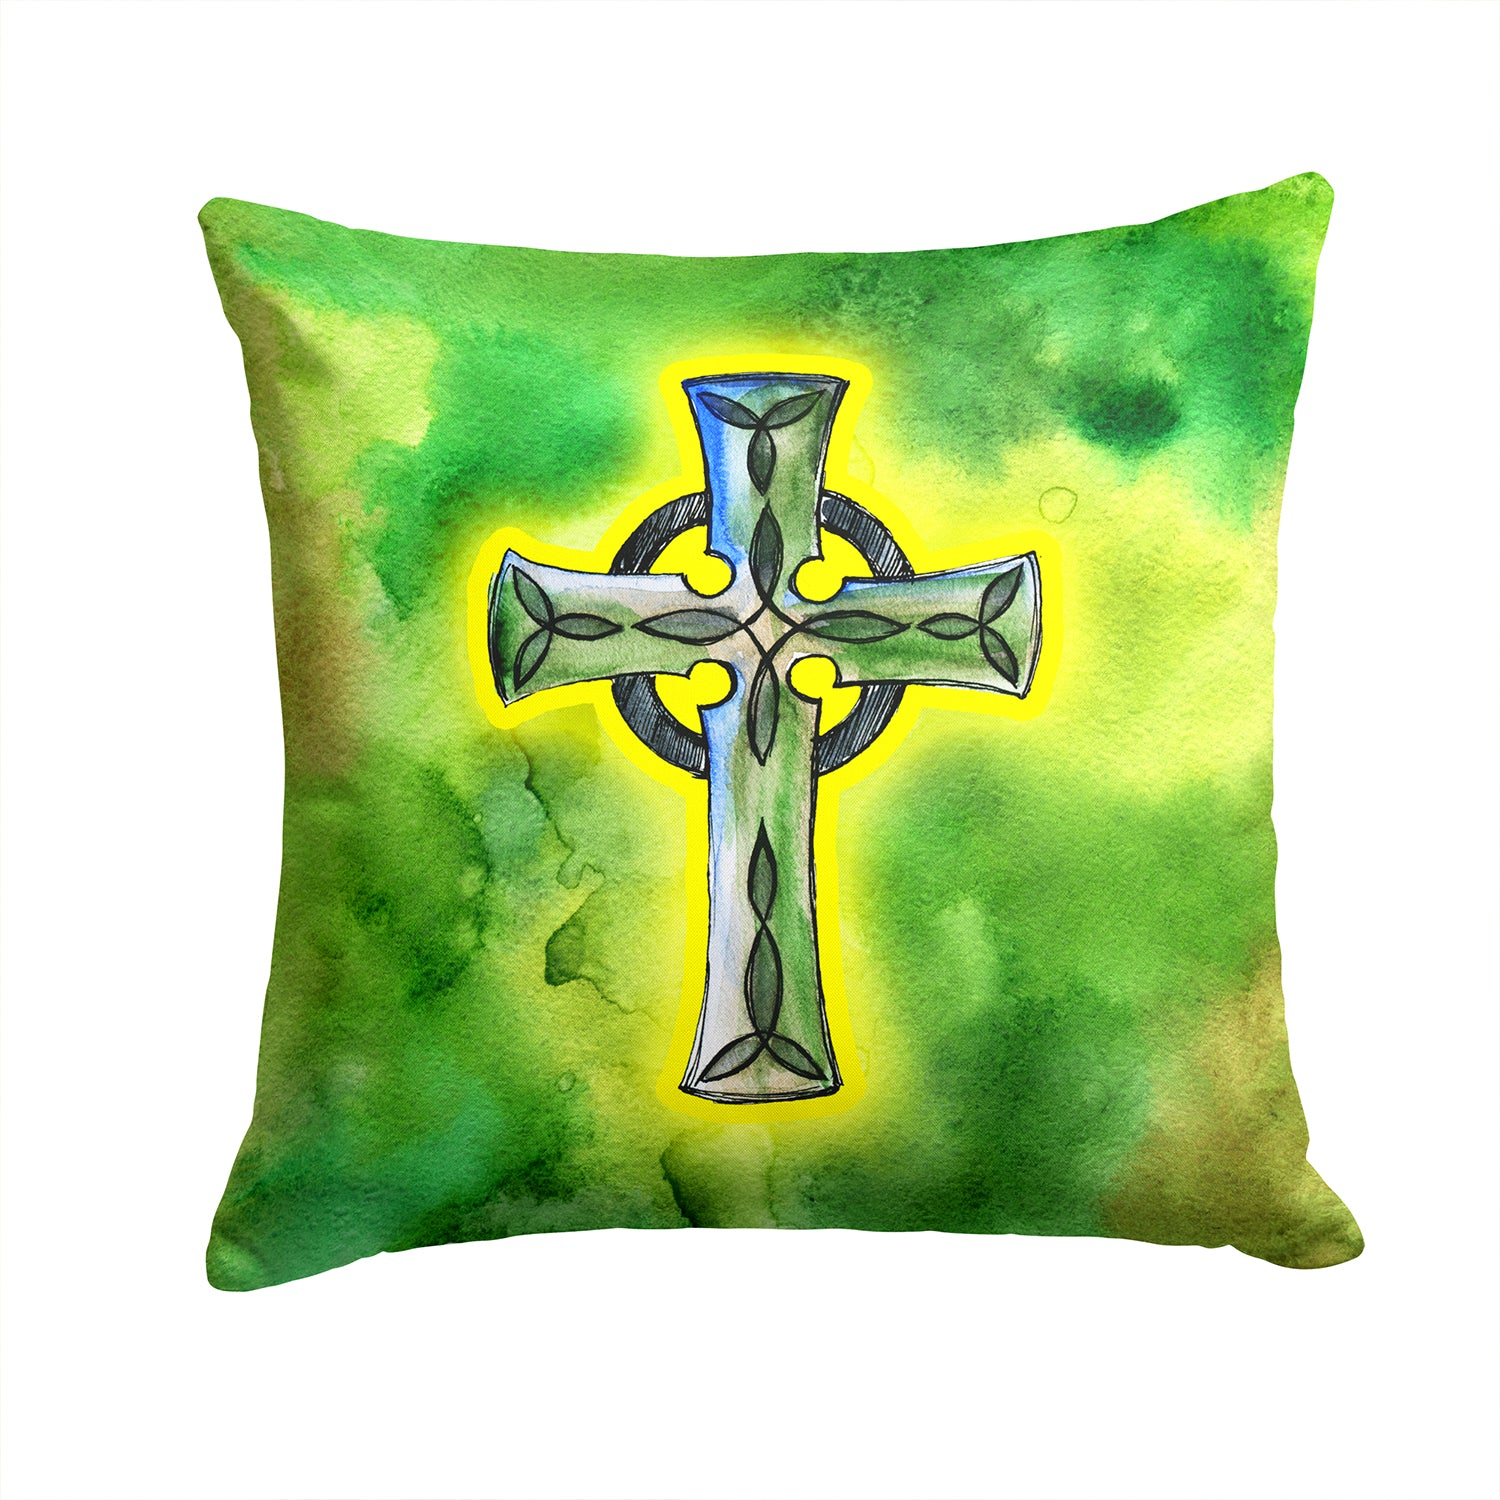 Irish Celtic Cross Fabric Decorative Pillow BB5764PW1414 - the-store.com